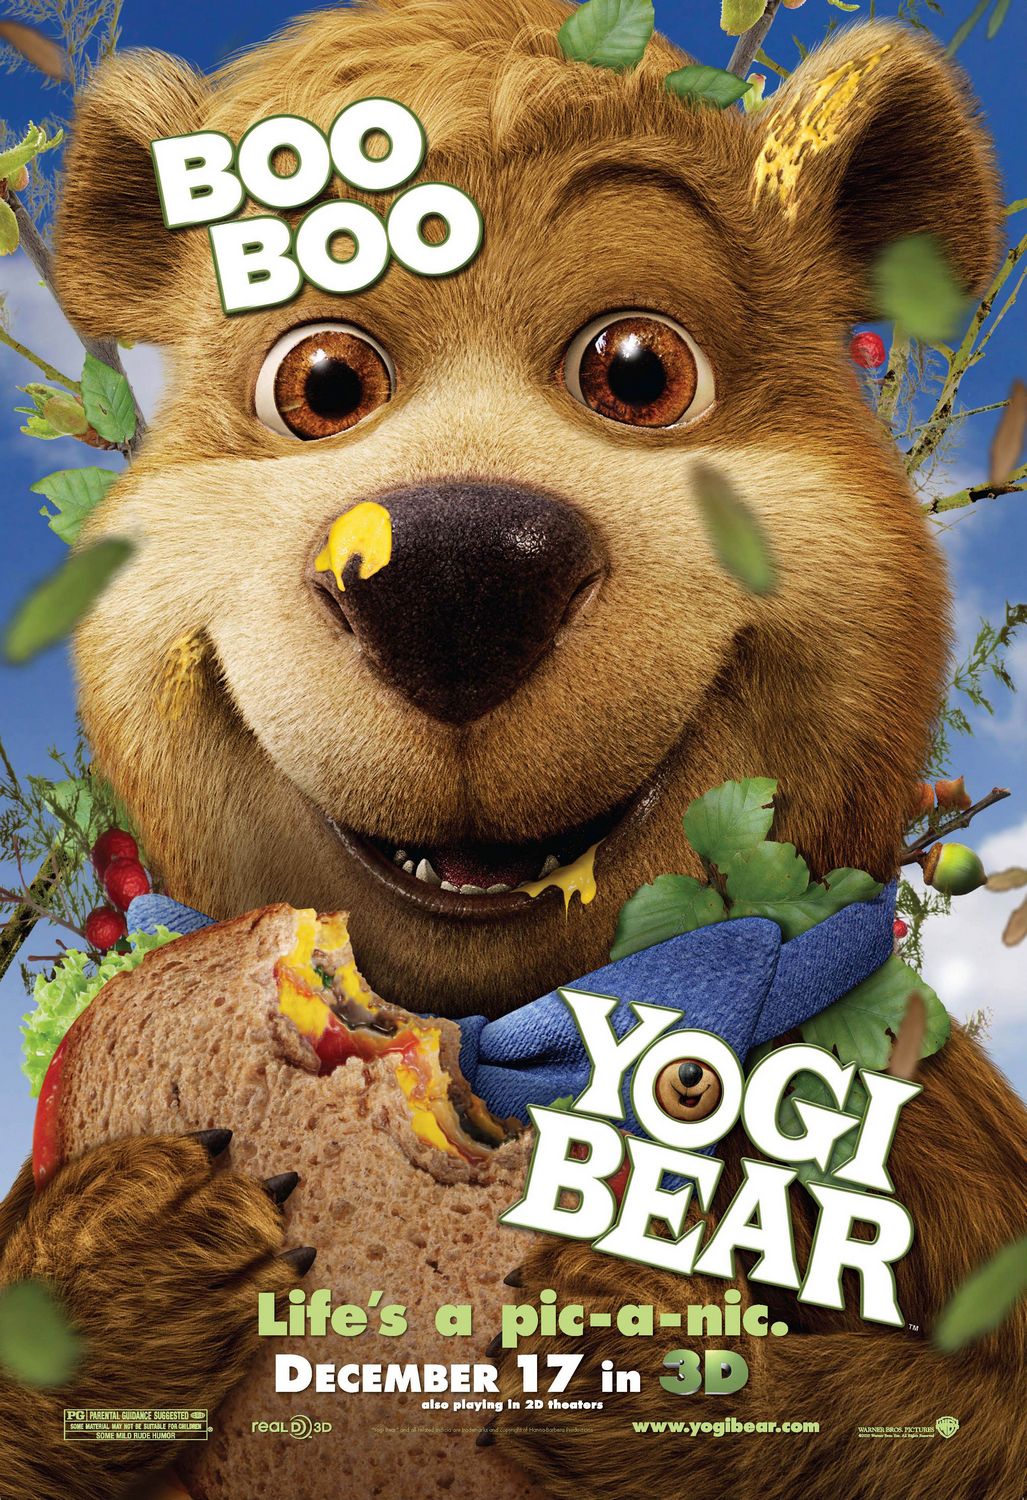 Extra Large Movie Poster Image for Yogi Bear (#7 of 12)